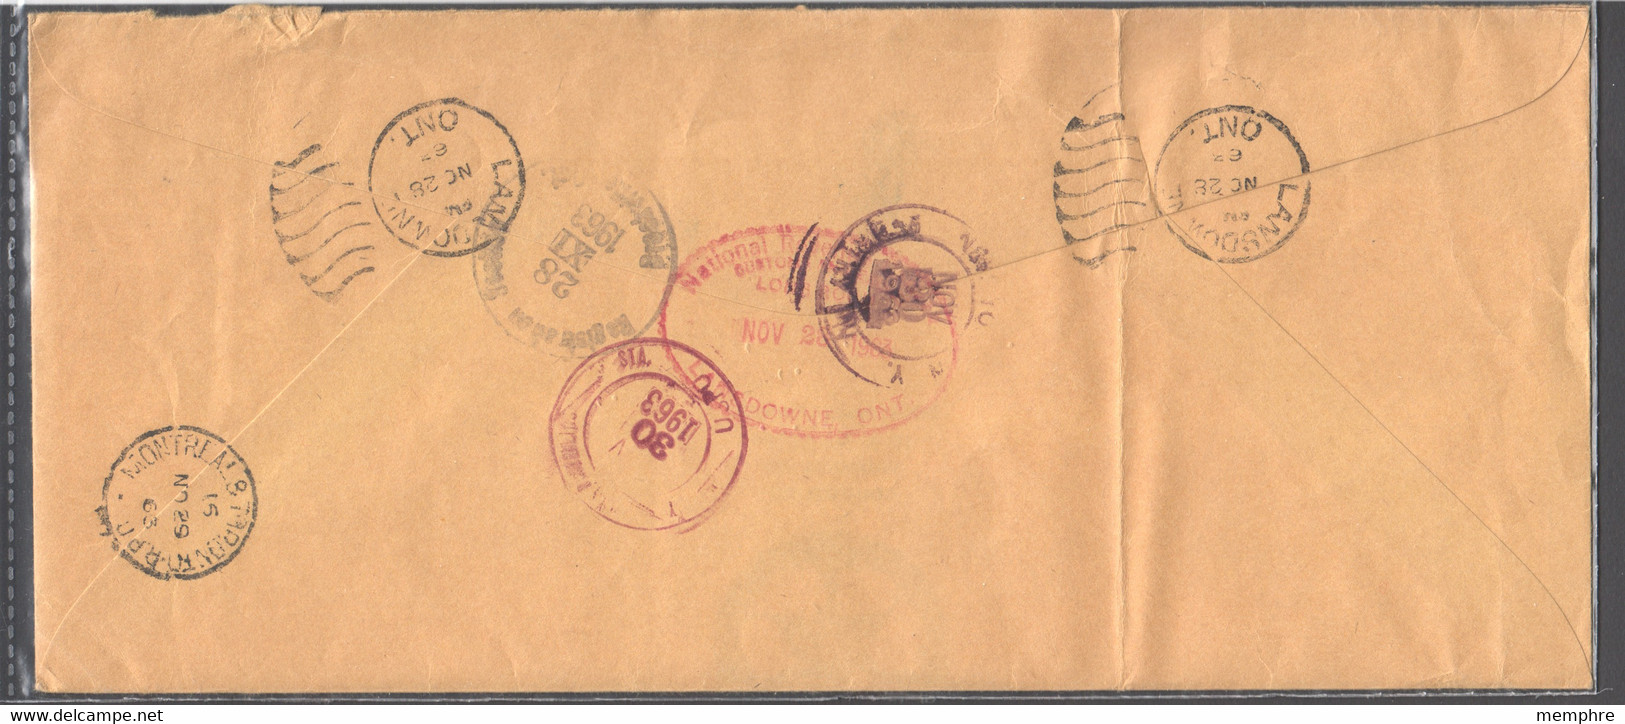 1963  Official Sc O45 Pair Of Official Registered Letter To USA - Briefe U. Dokumente